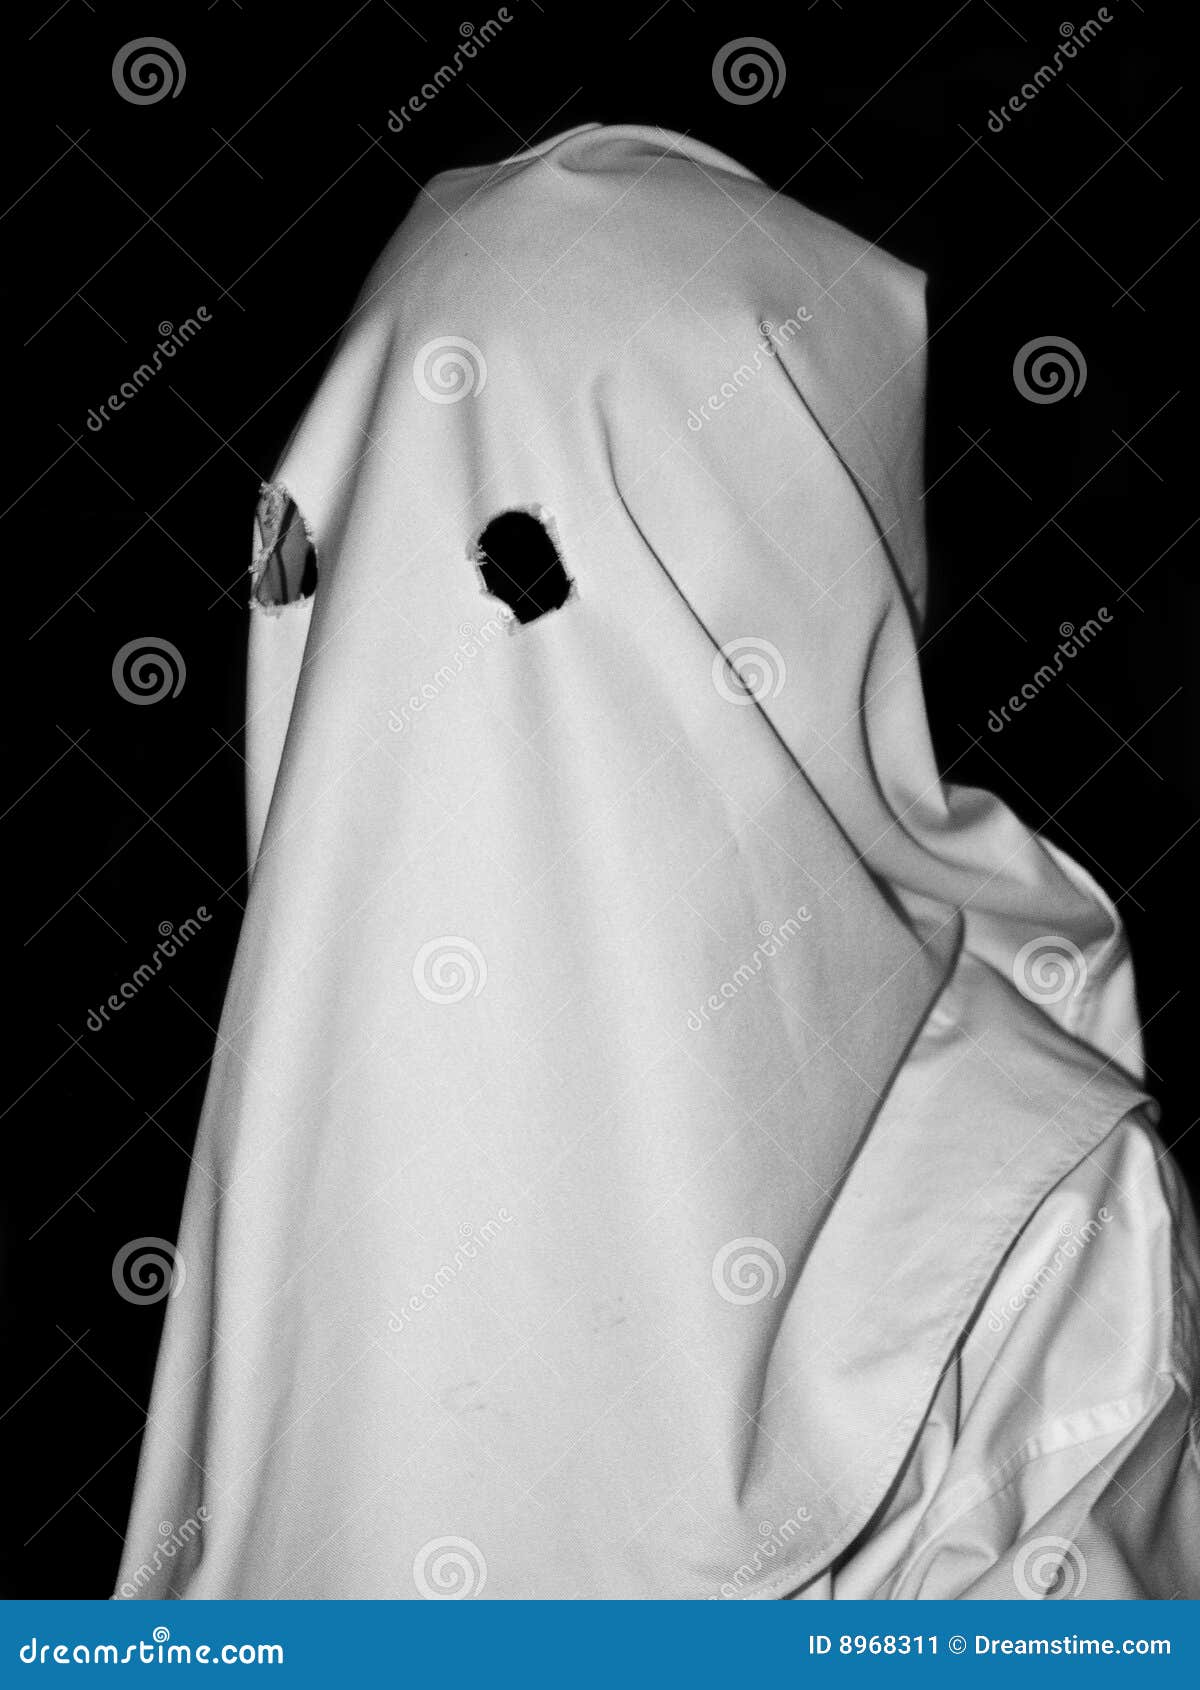 Hooded Figure stock image. Image of portrait, eerie, soul - 8968311